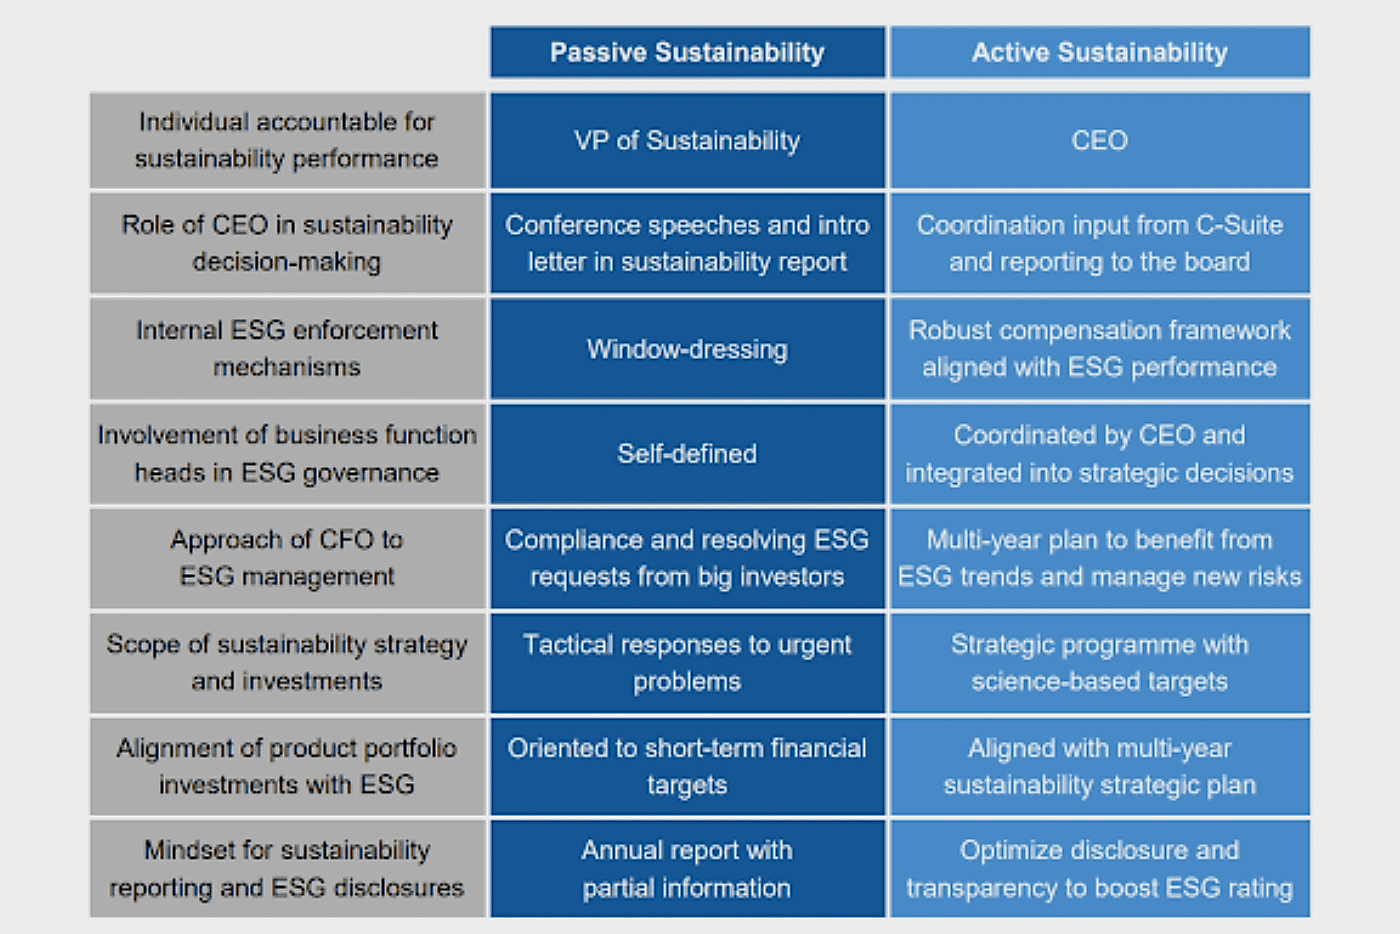 Image 4: Comparison of Passive & Active Sustainability Strategies. 